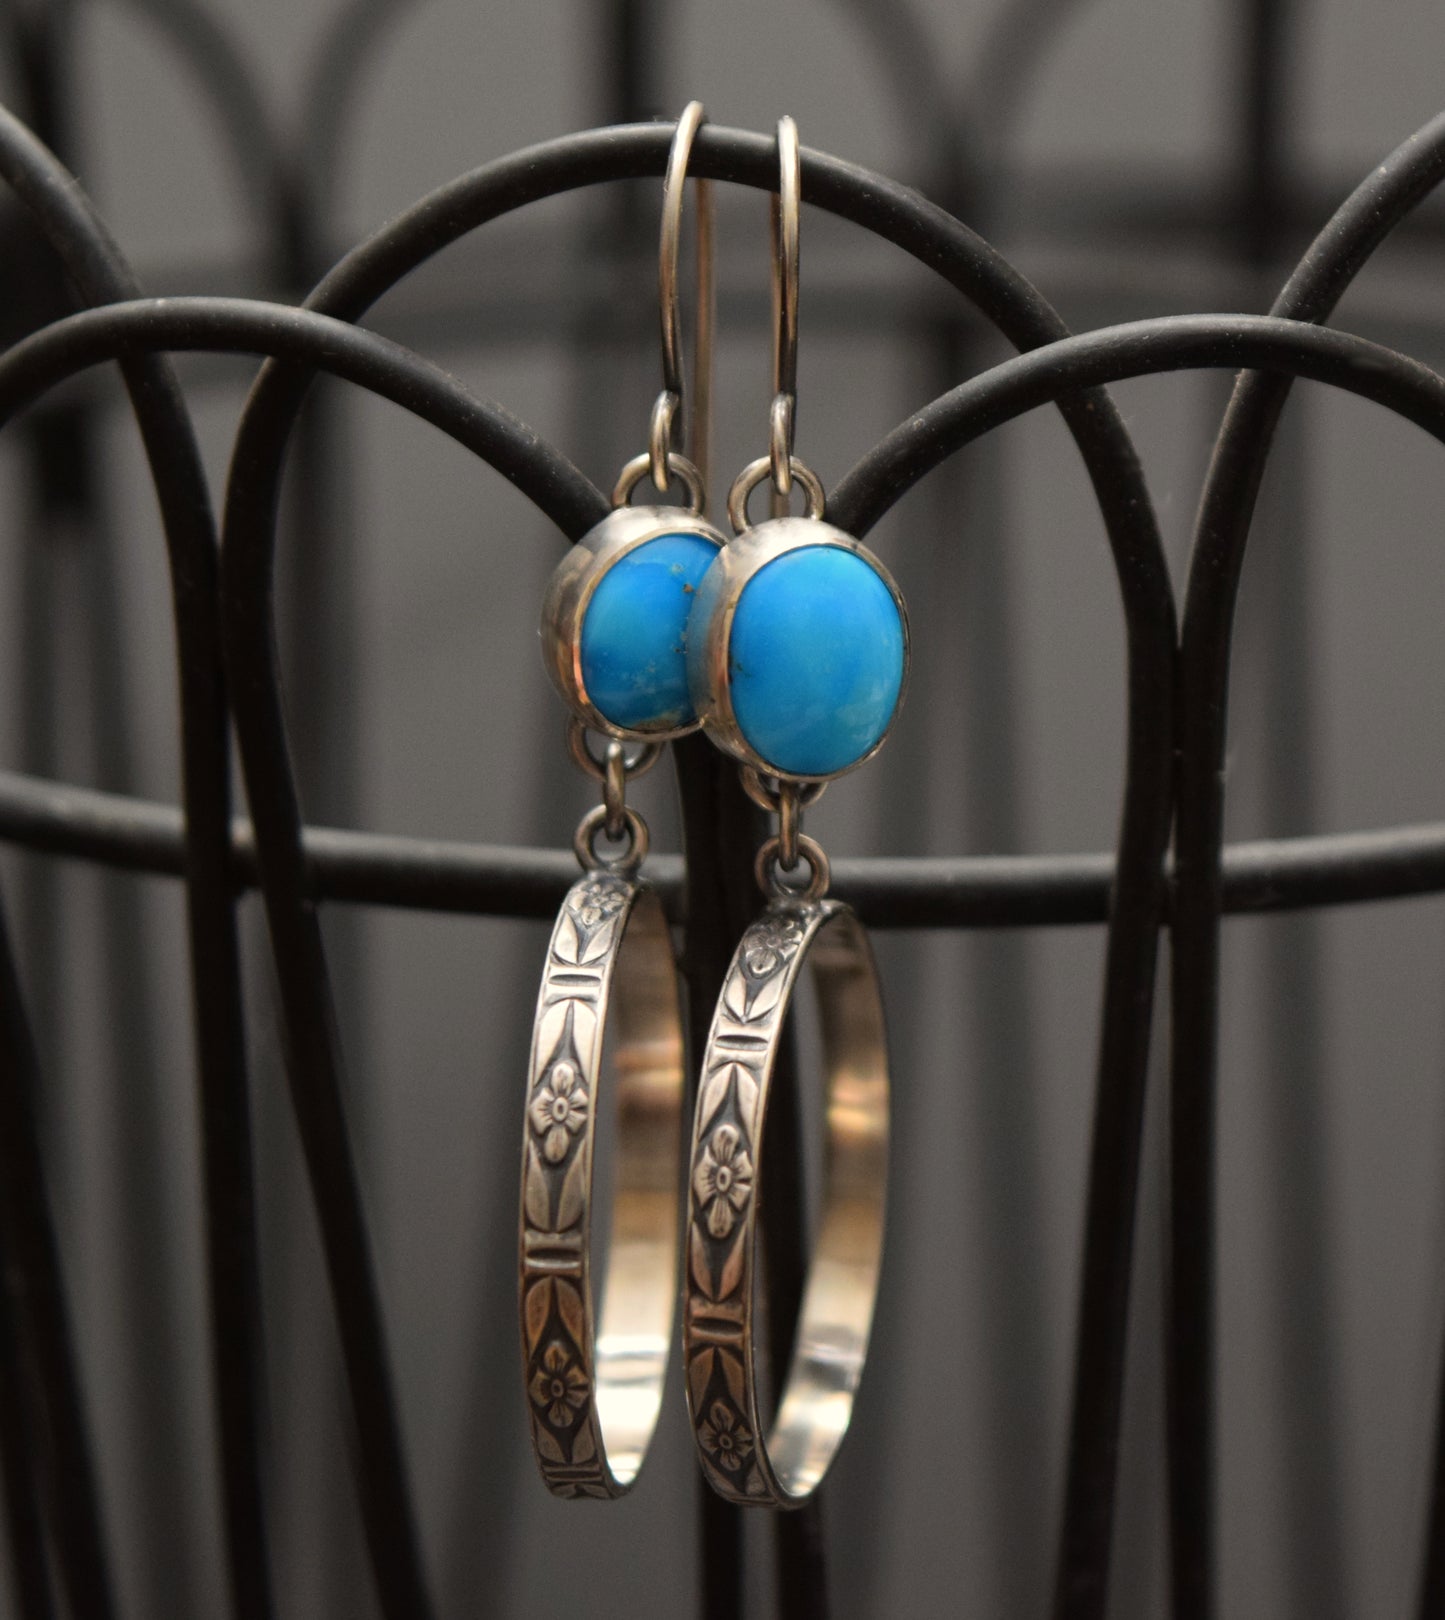 Turquoise & Sterling Silver Hoop Earrings | Sonoran Rose Turquoise & Dangly Floral Patterned Hoops